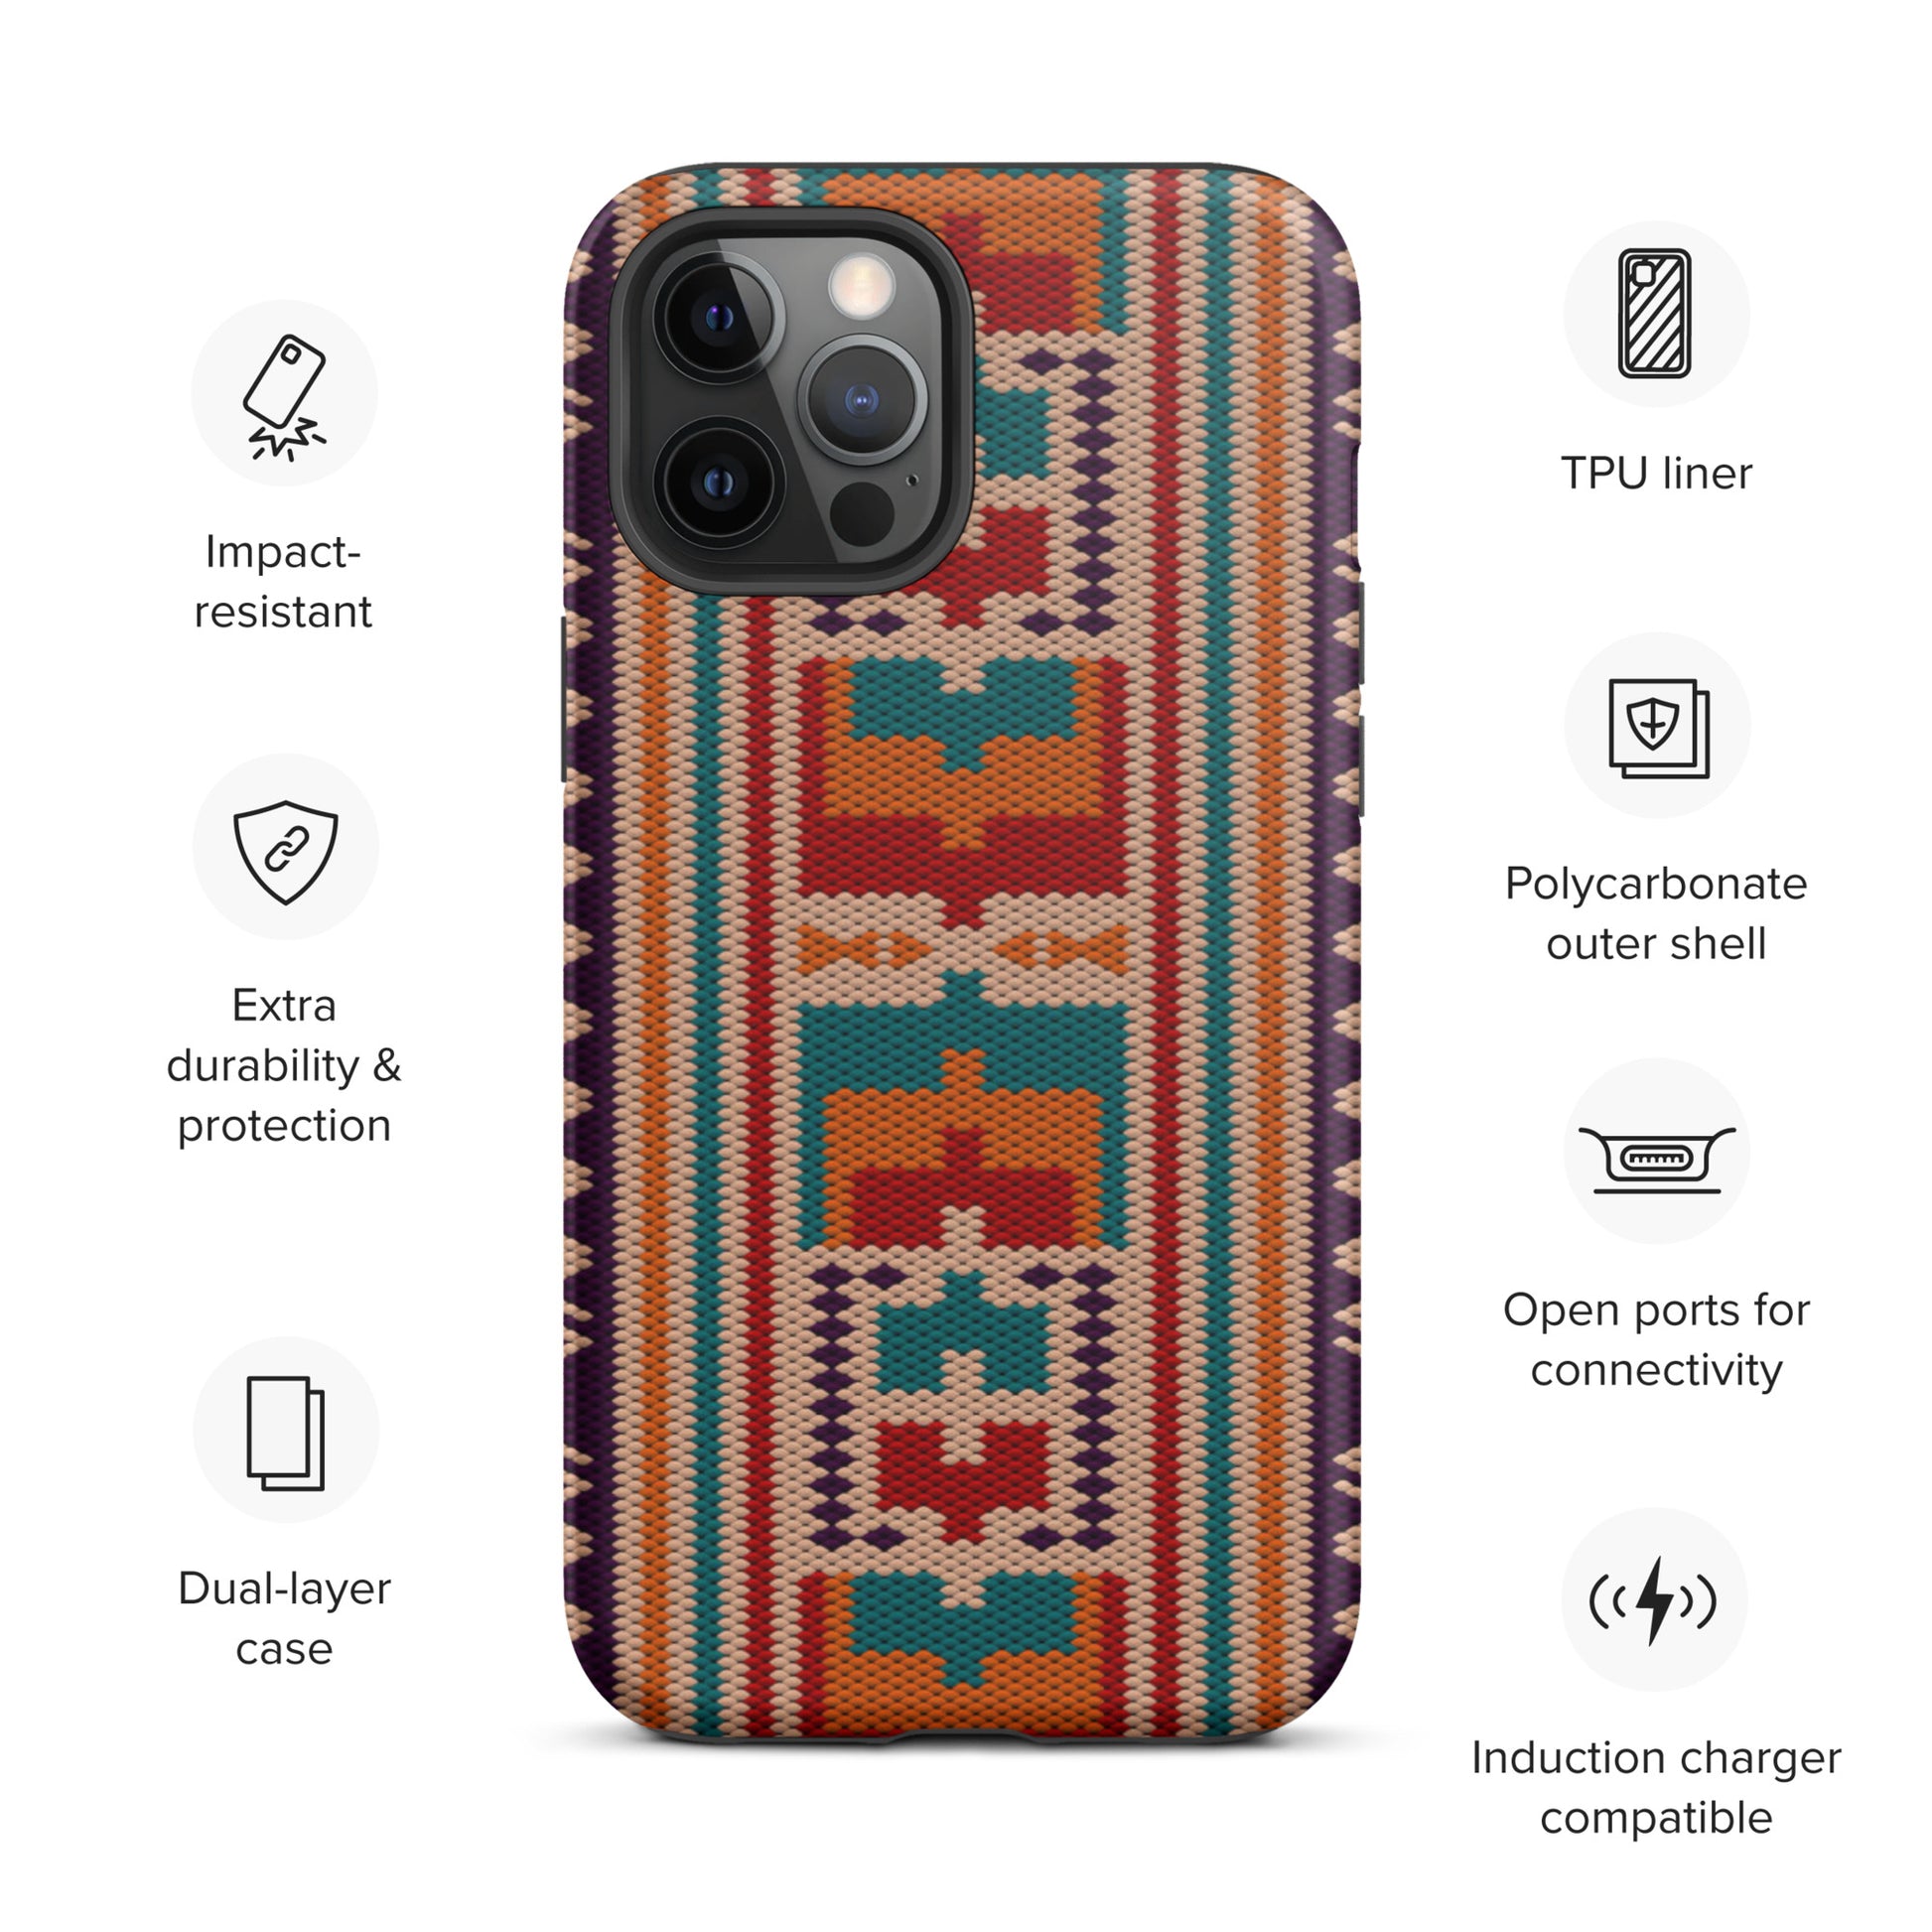 Navajo Tough iPhone 12 Pro Max case